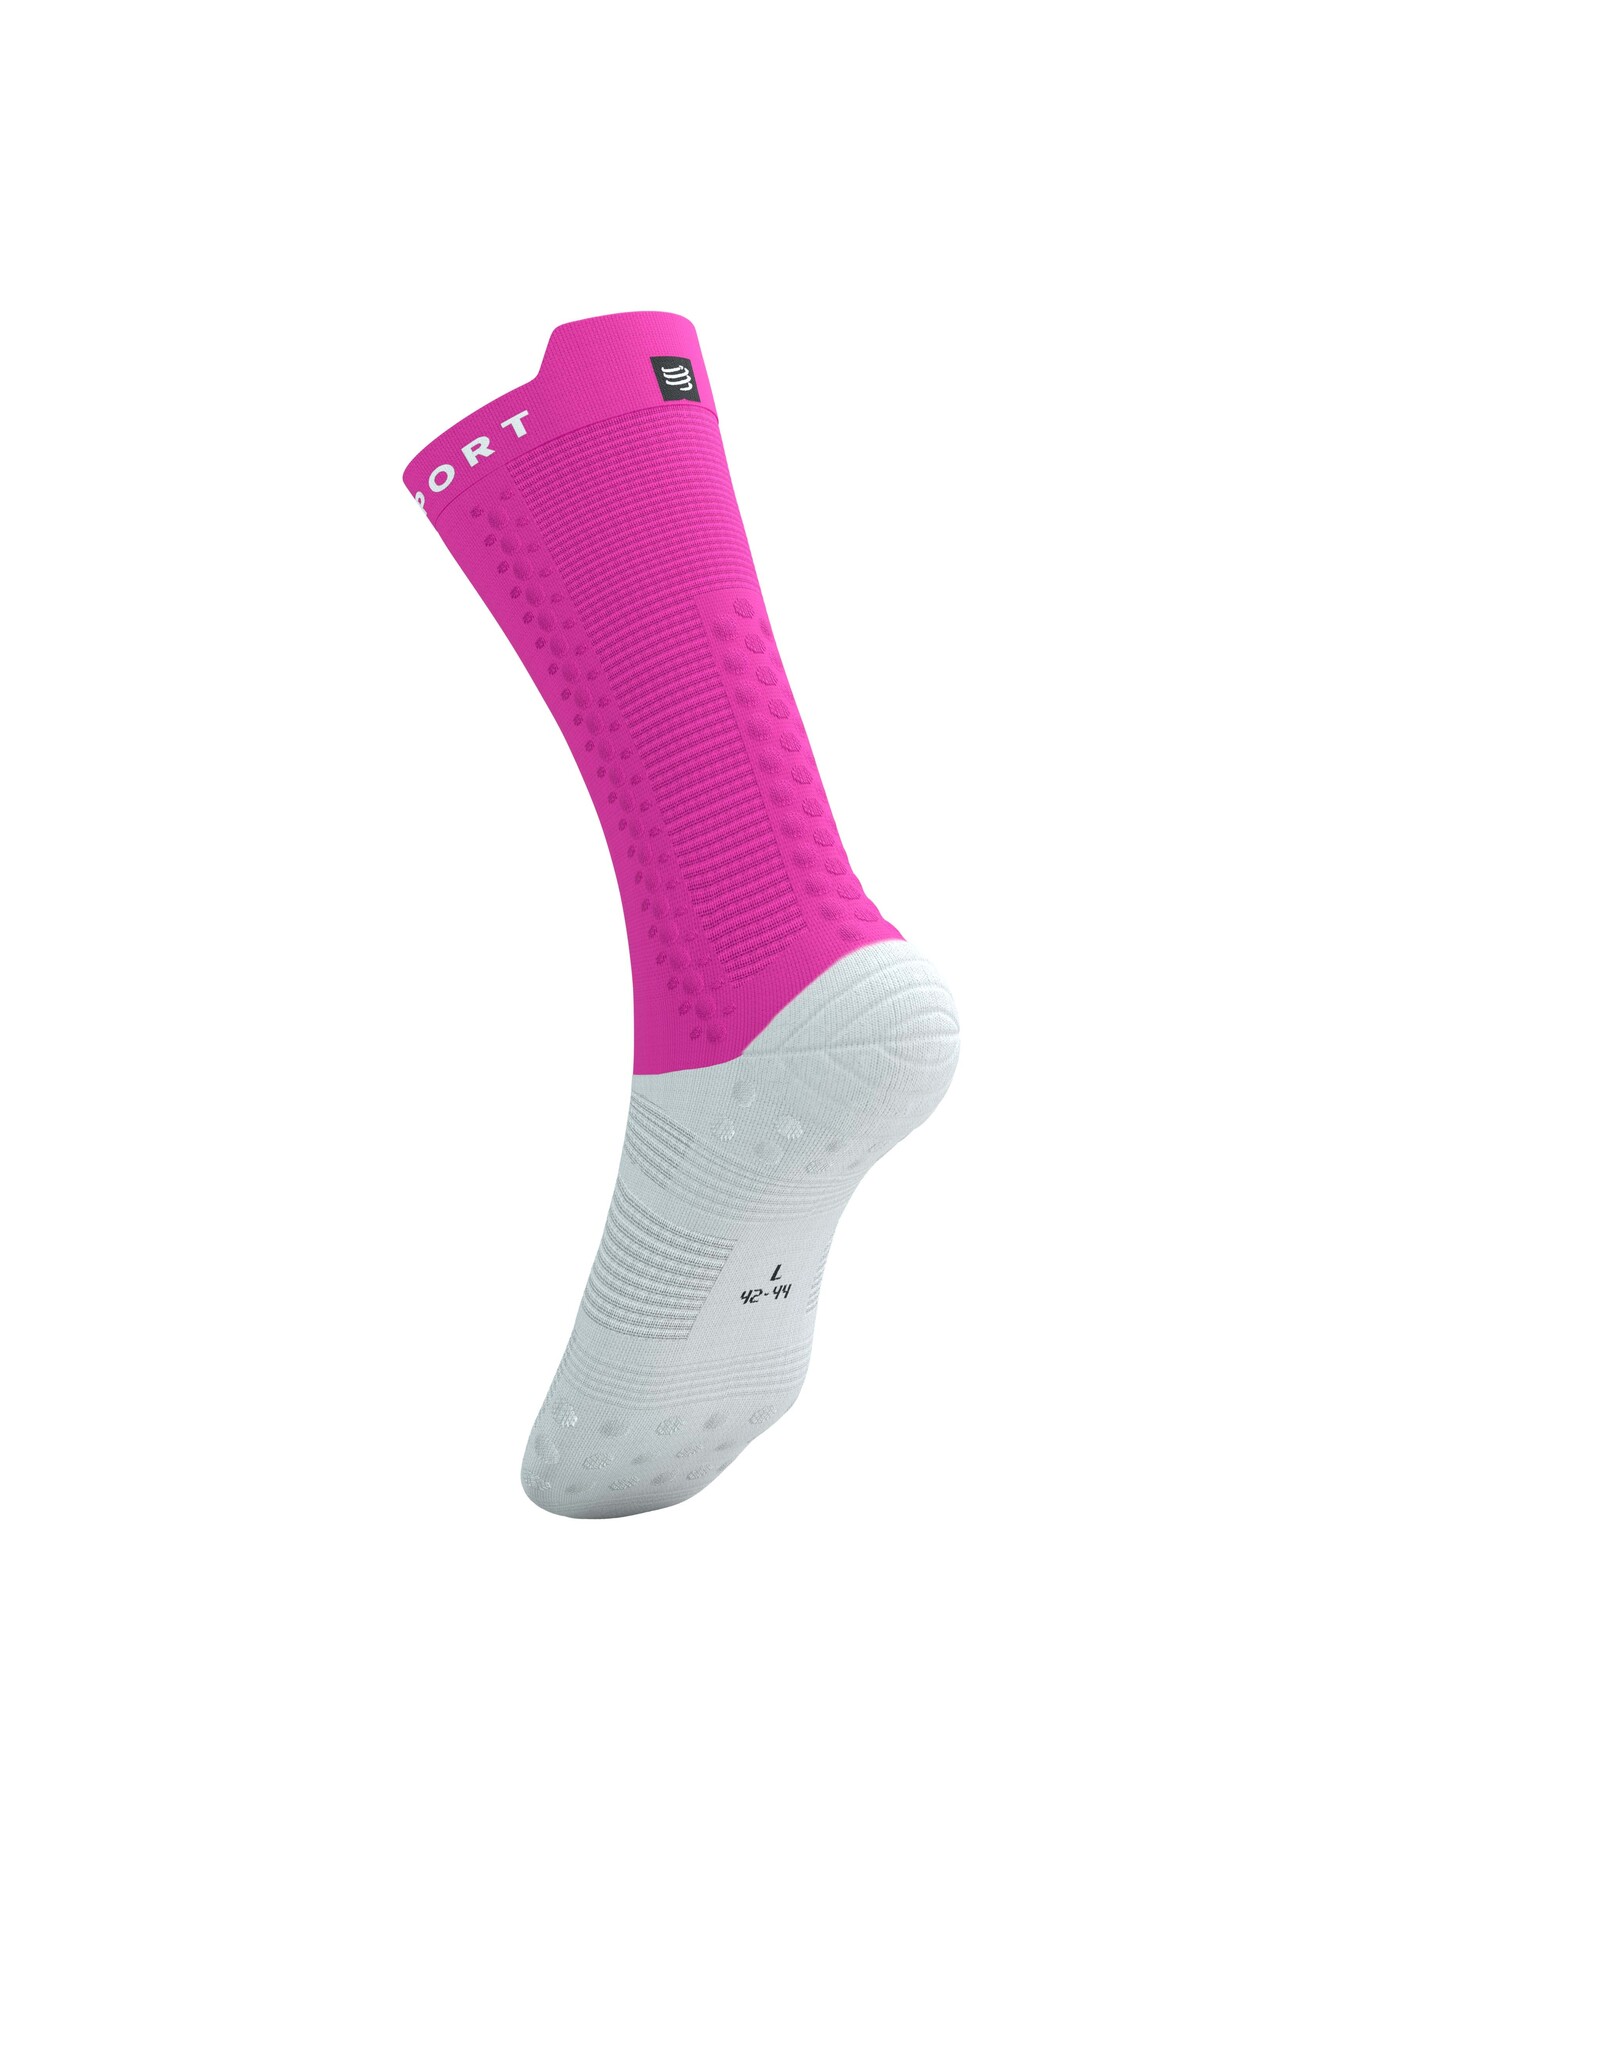 Compressport Pro Racing Socks v4.0 Bike - White/Neon Pink/Black